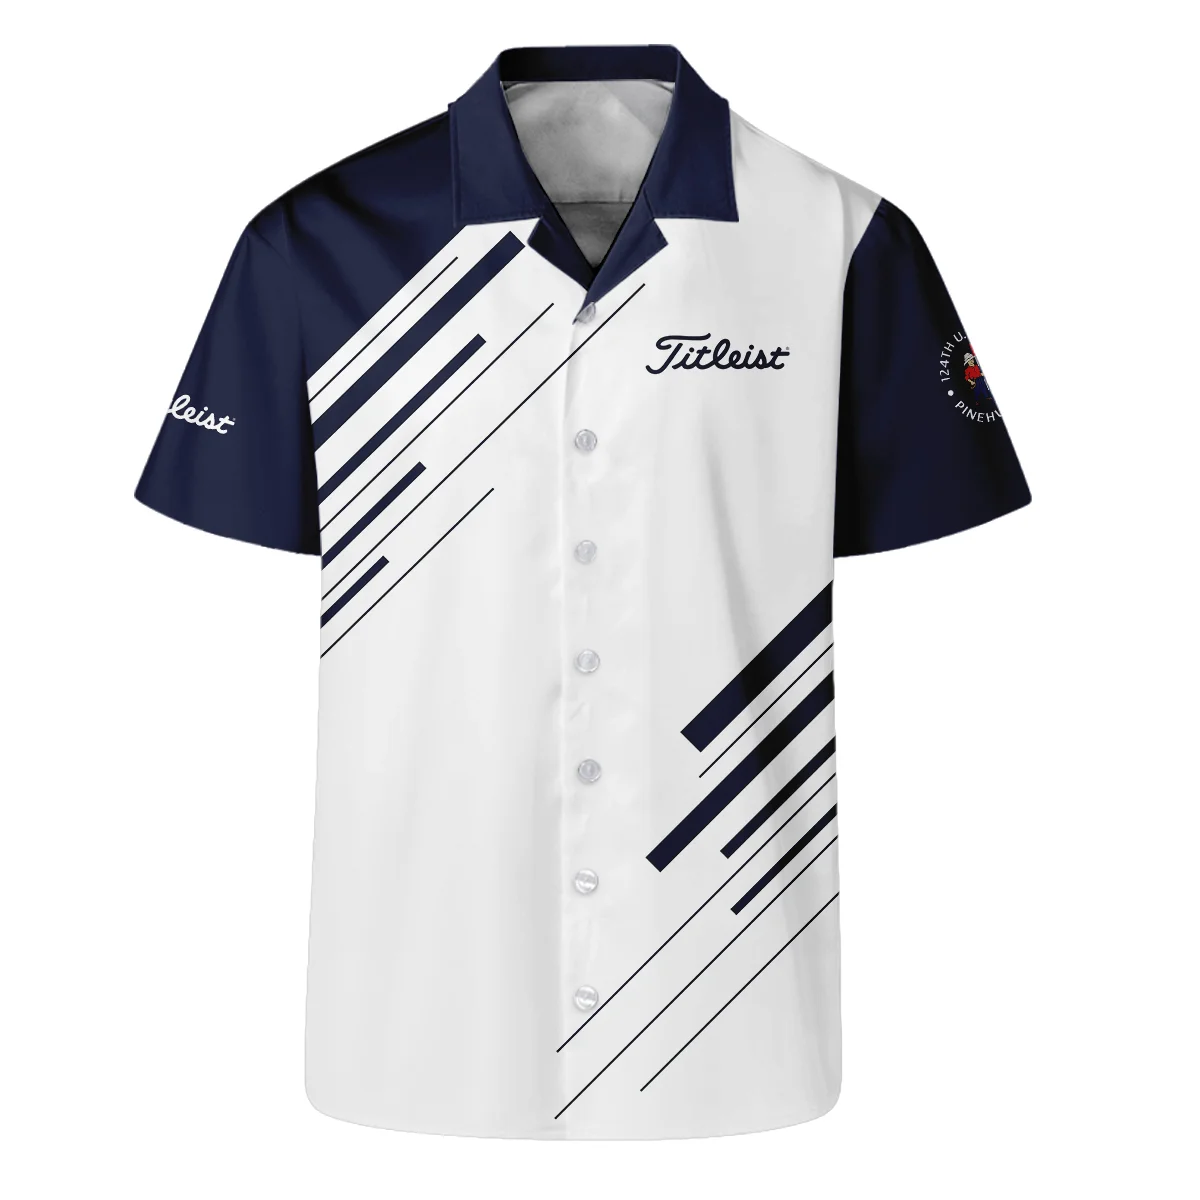 Titleist 124th U.S. Open Pinehurst Golf Unisex T-Shirt Striped Pattern Dark Blue White All Over Print T-Shirt